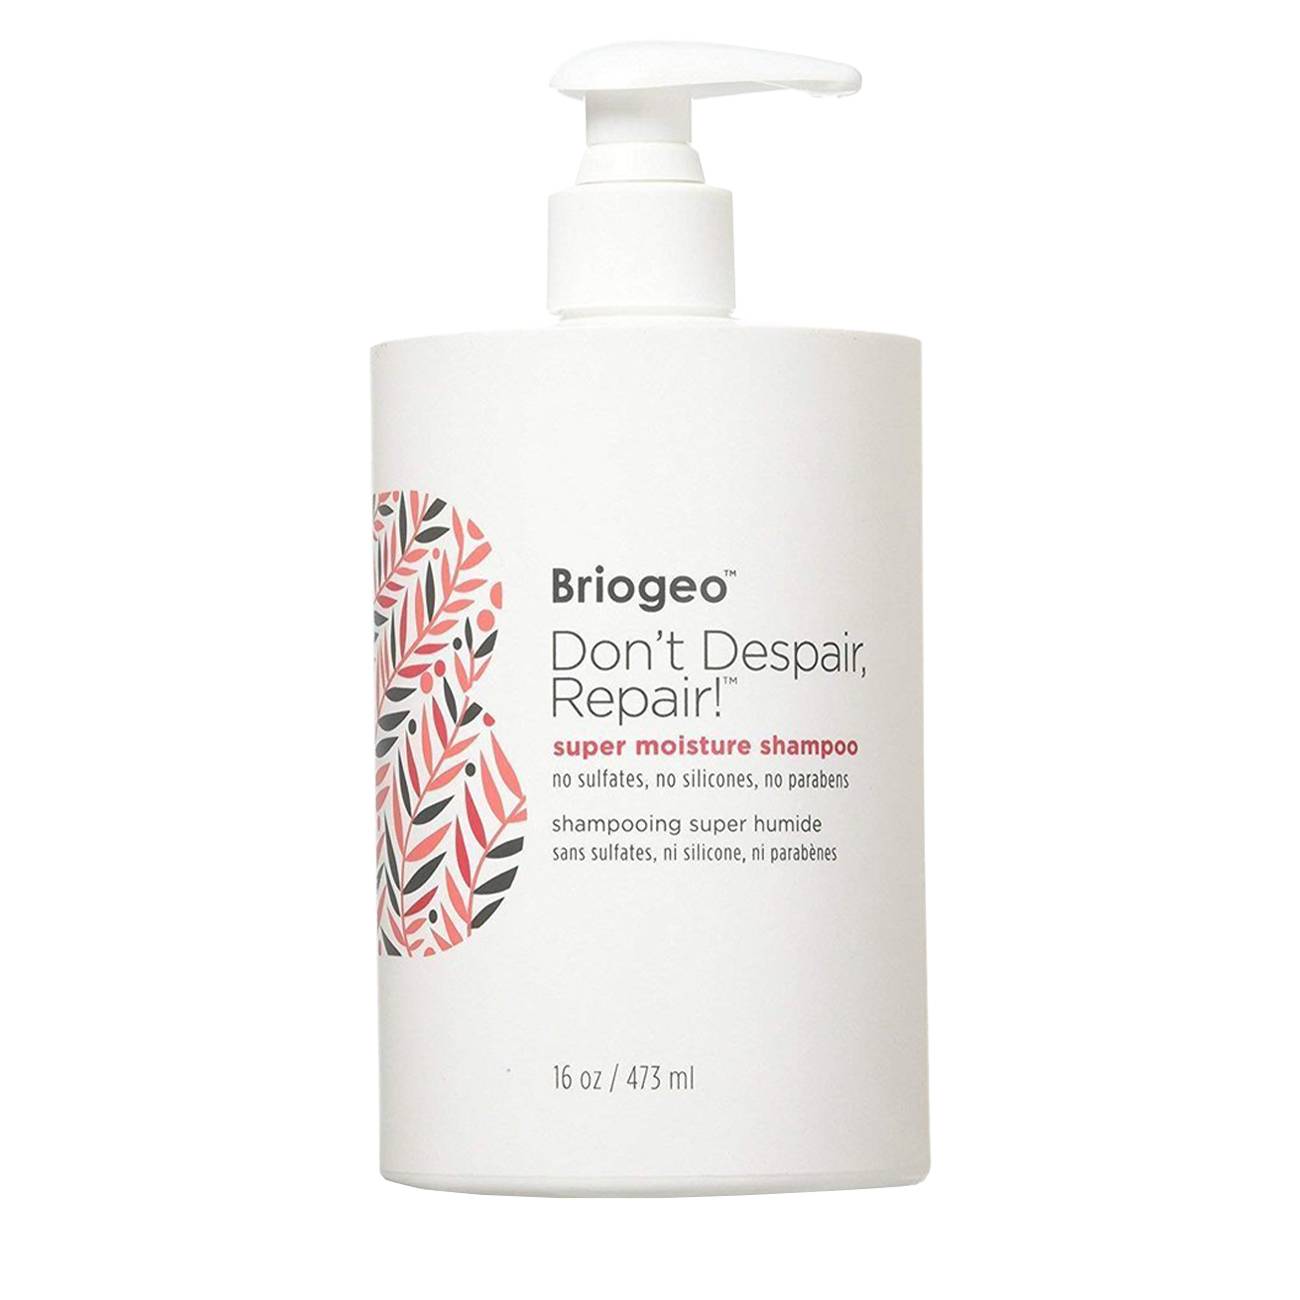 Don’t Despair Repair Super Moisture Shampoo 473 ml Briogeo bestvalue.eu